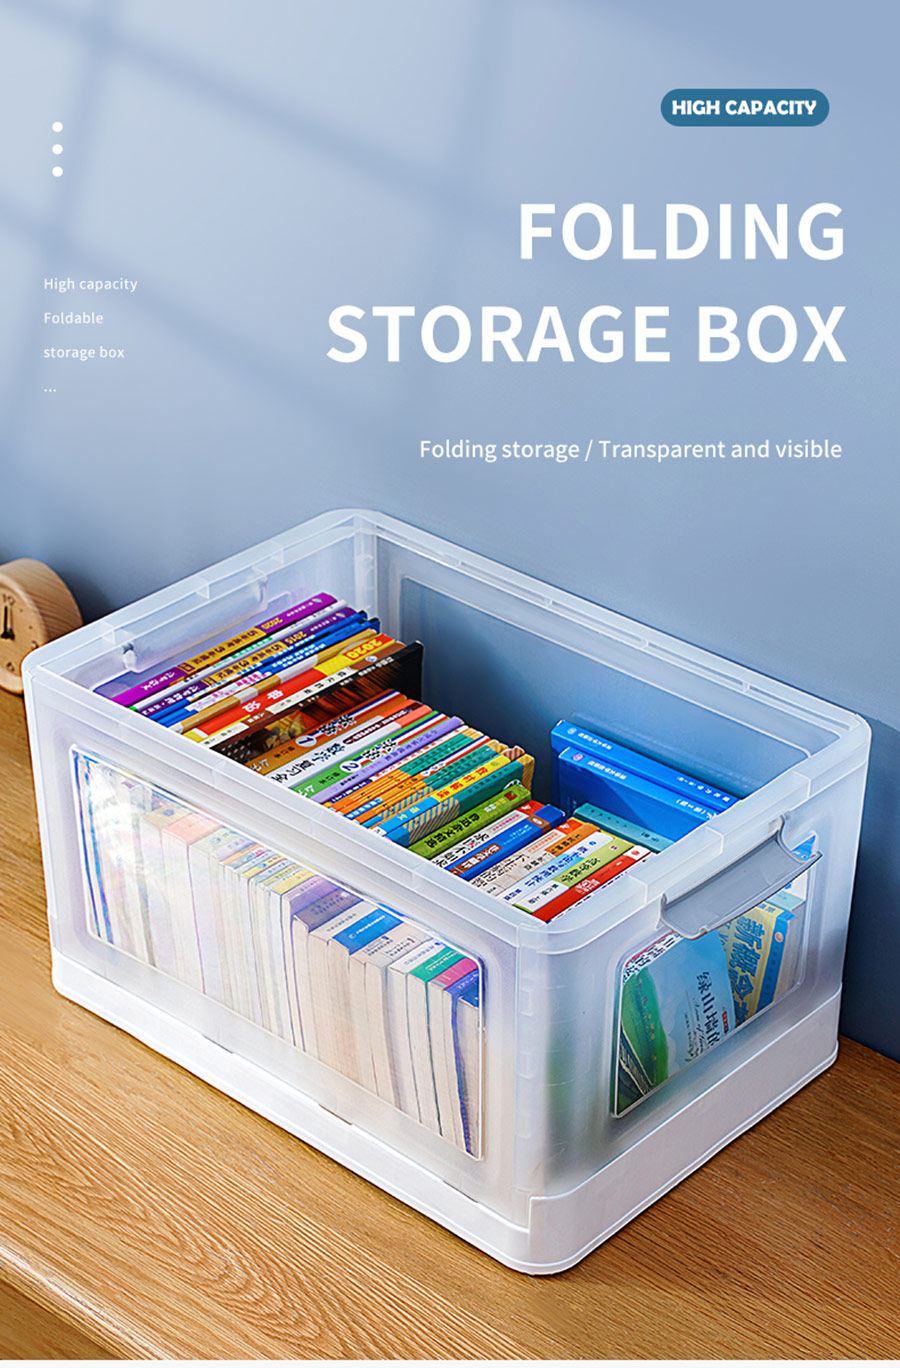 Folding-storage-box-singula-(1)